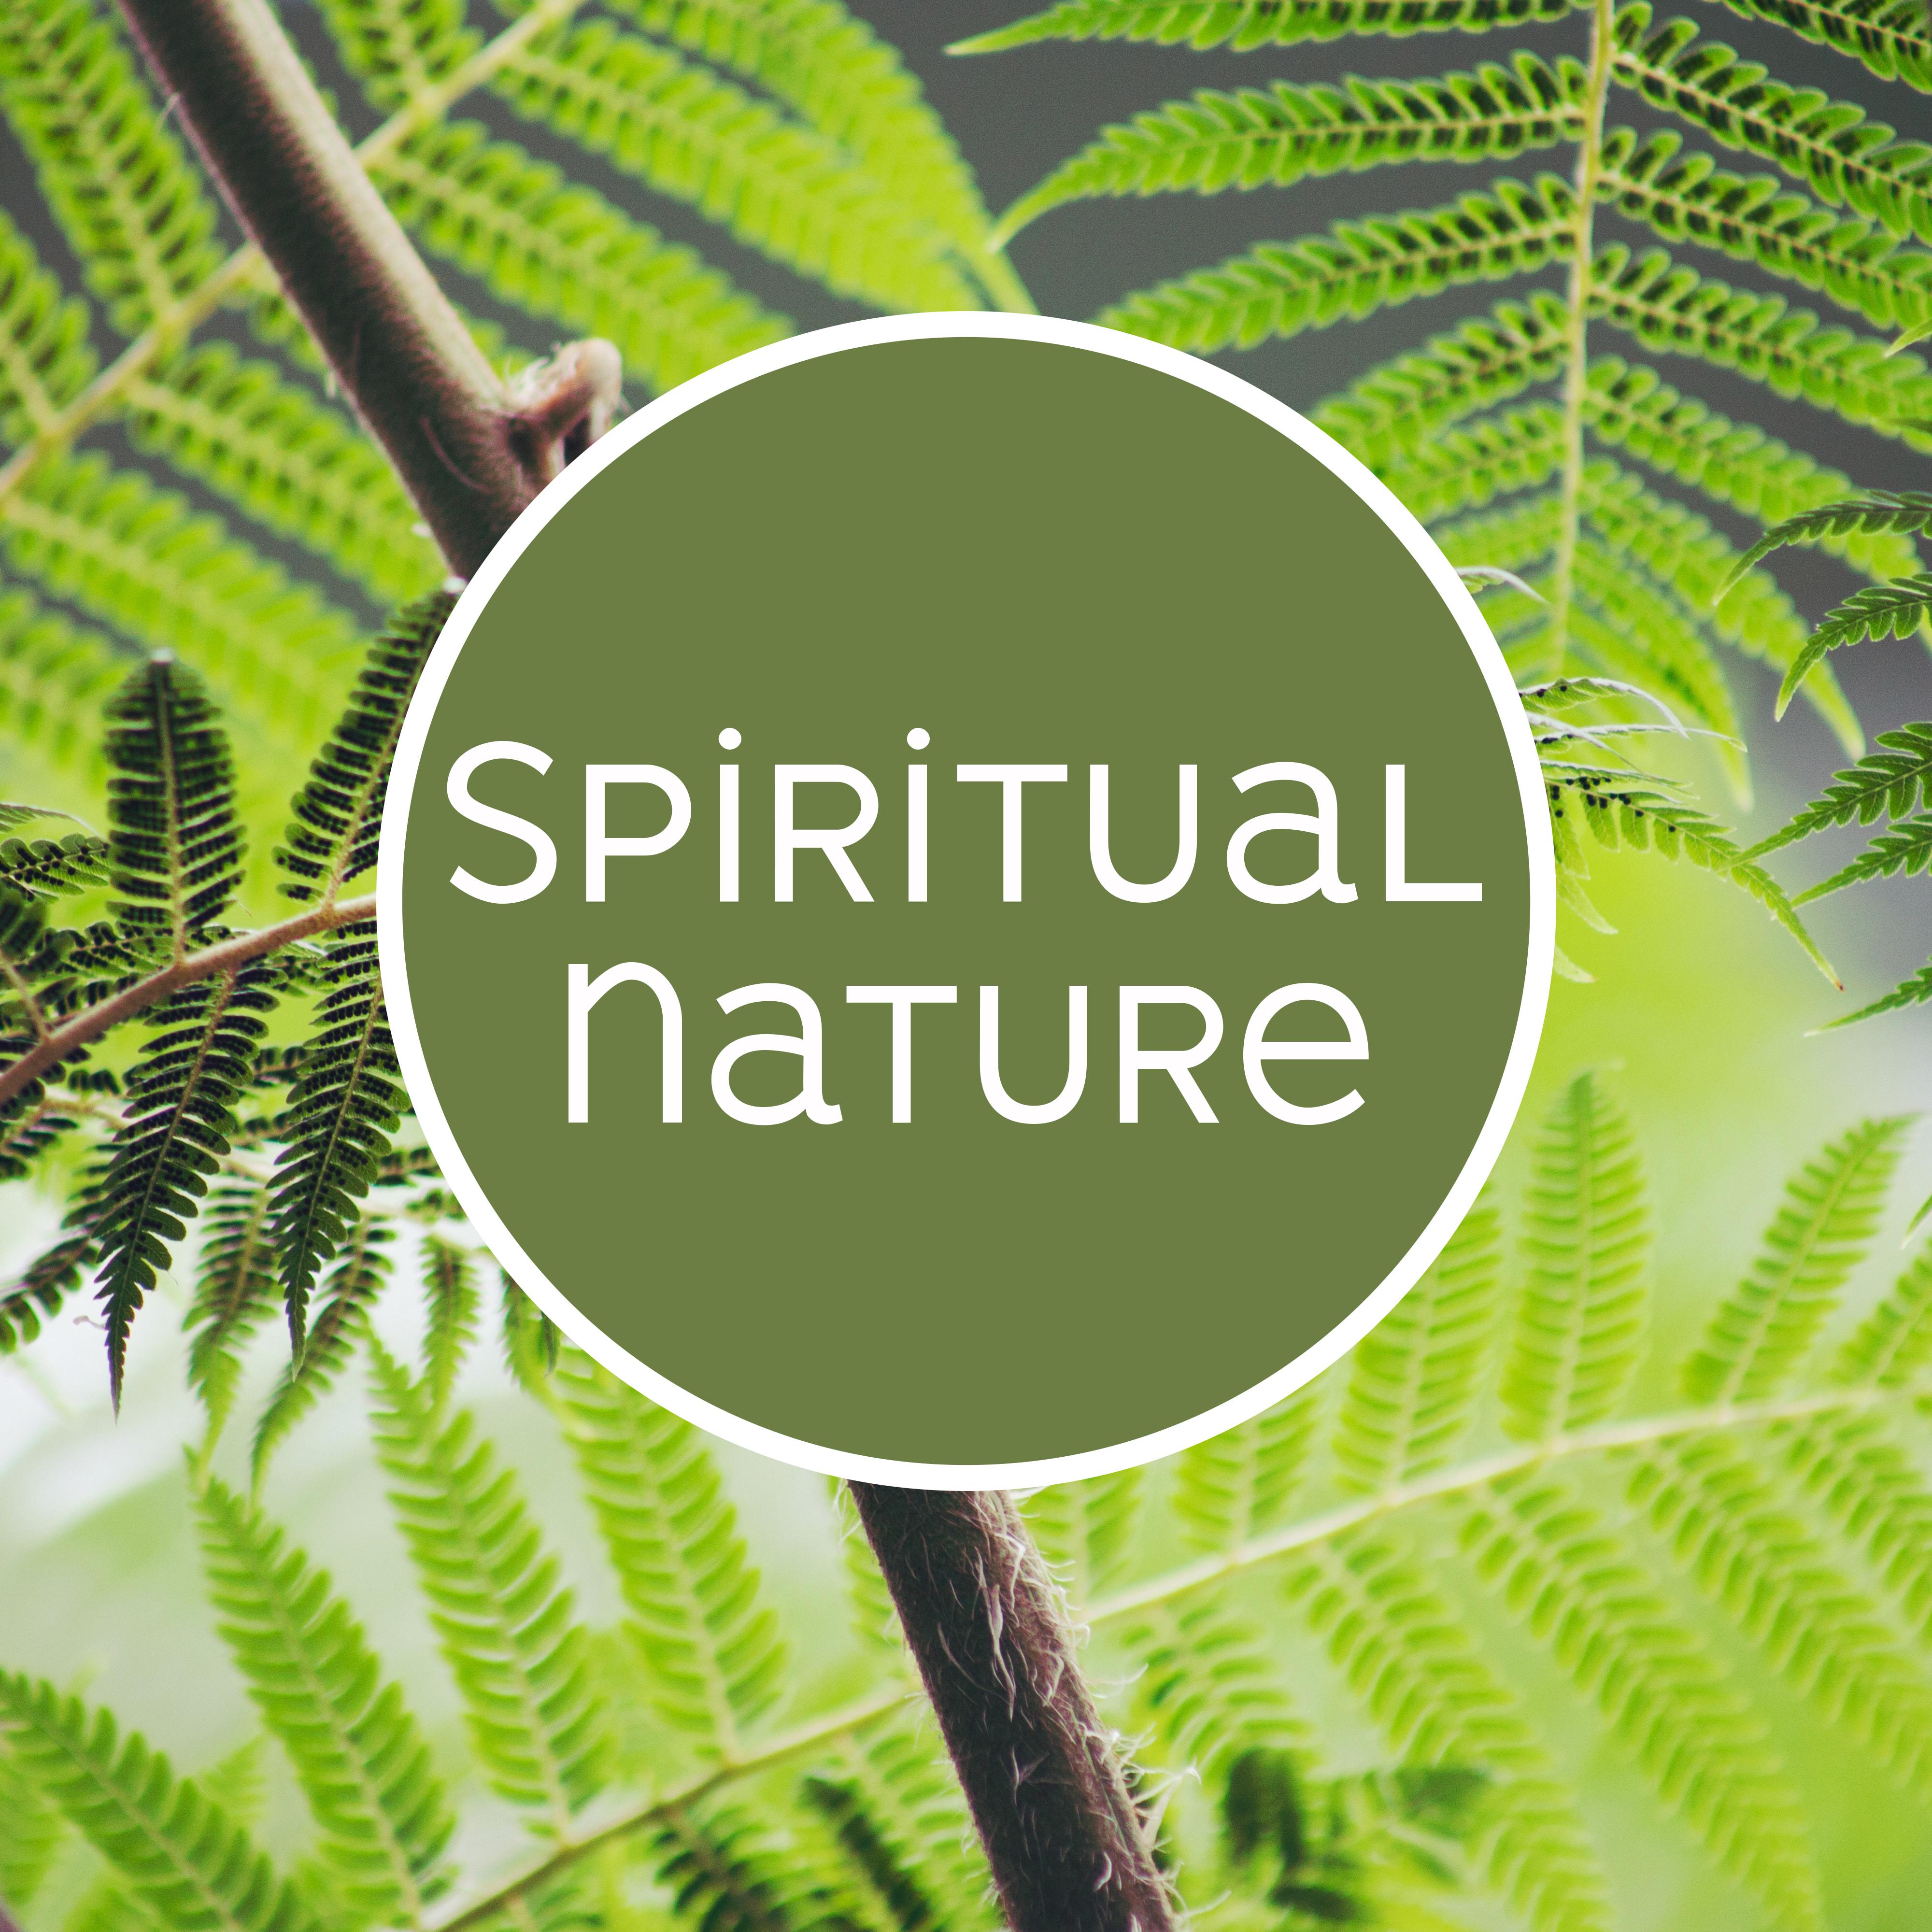 Spiritual Nature – Soft Music to Rest, Nature Relaxation, Healing Waves, Spiritual Calmness